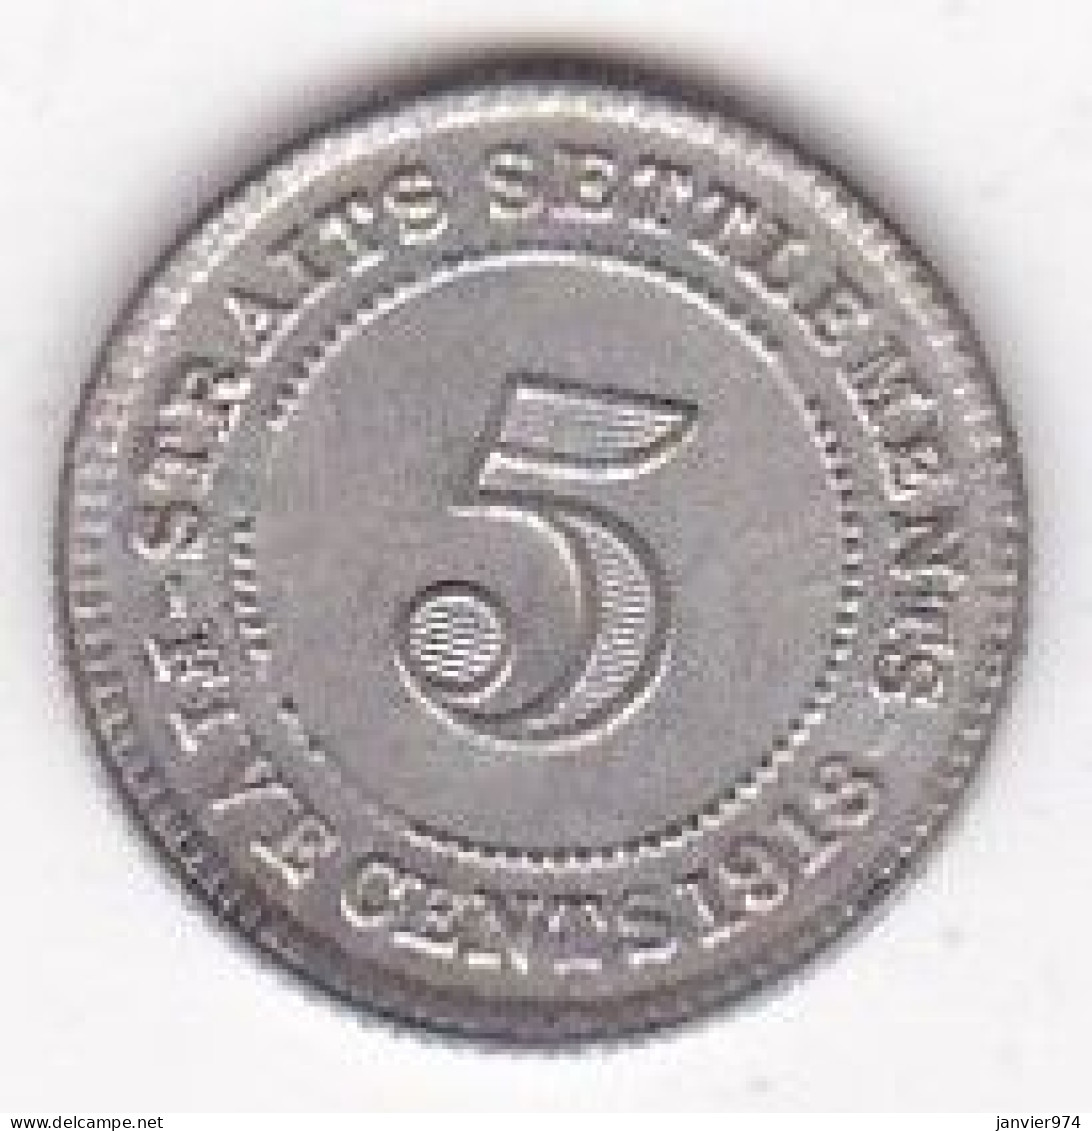 Straits Settlements , 5 Cents 1918 . George V. En Argent. KM# 31, Superbe - Malaysie